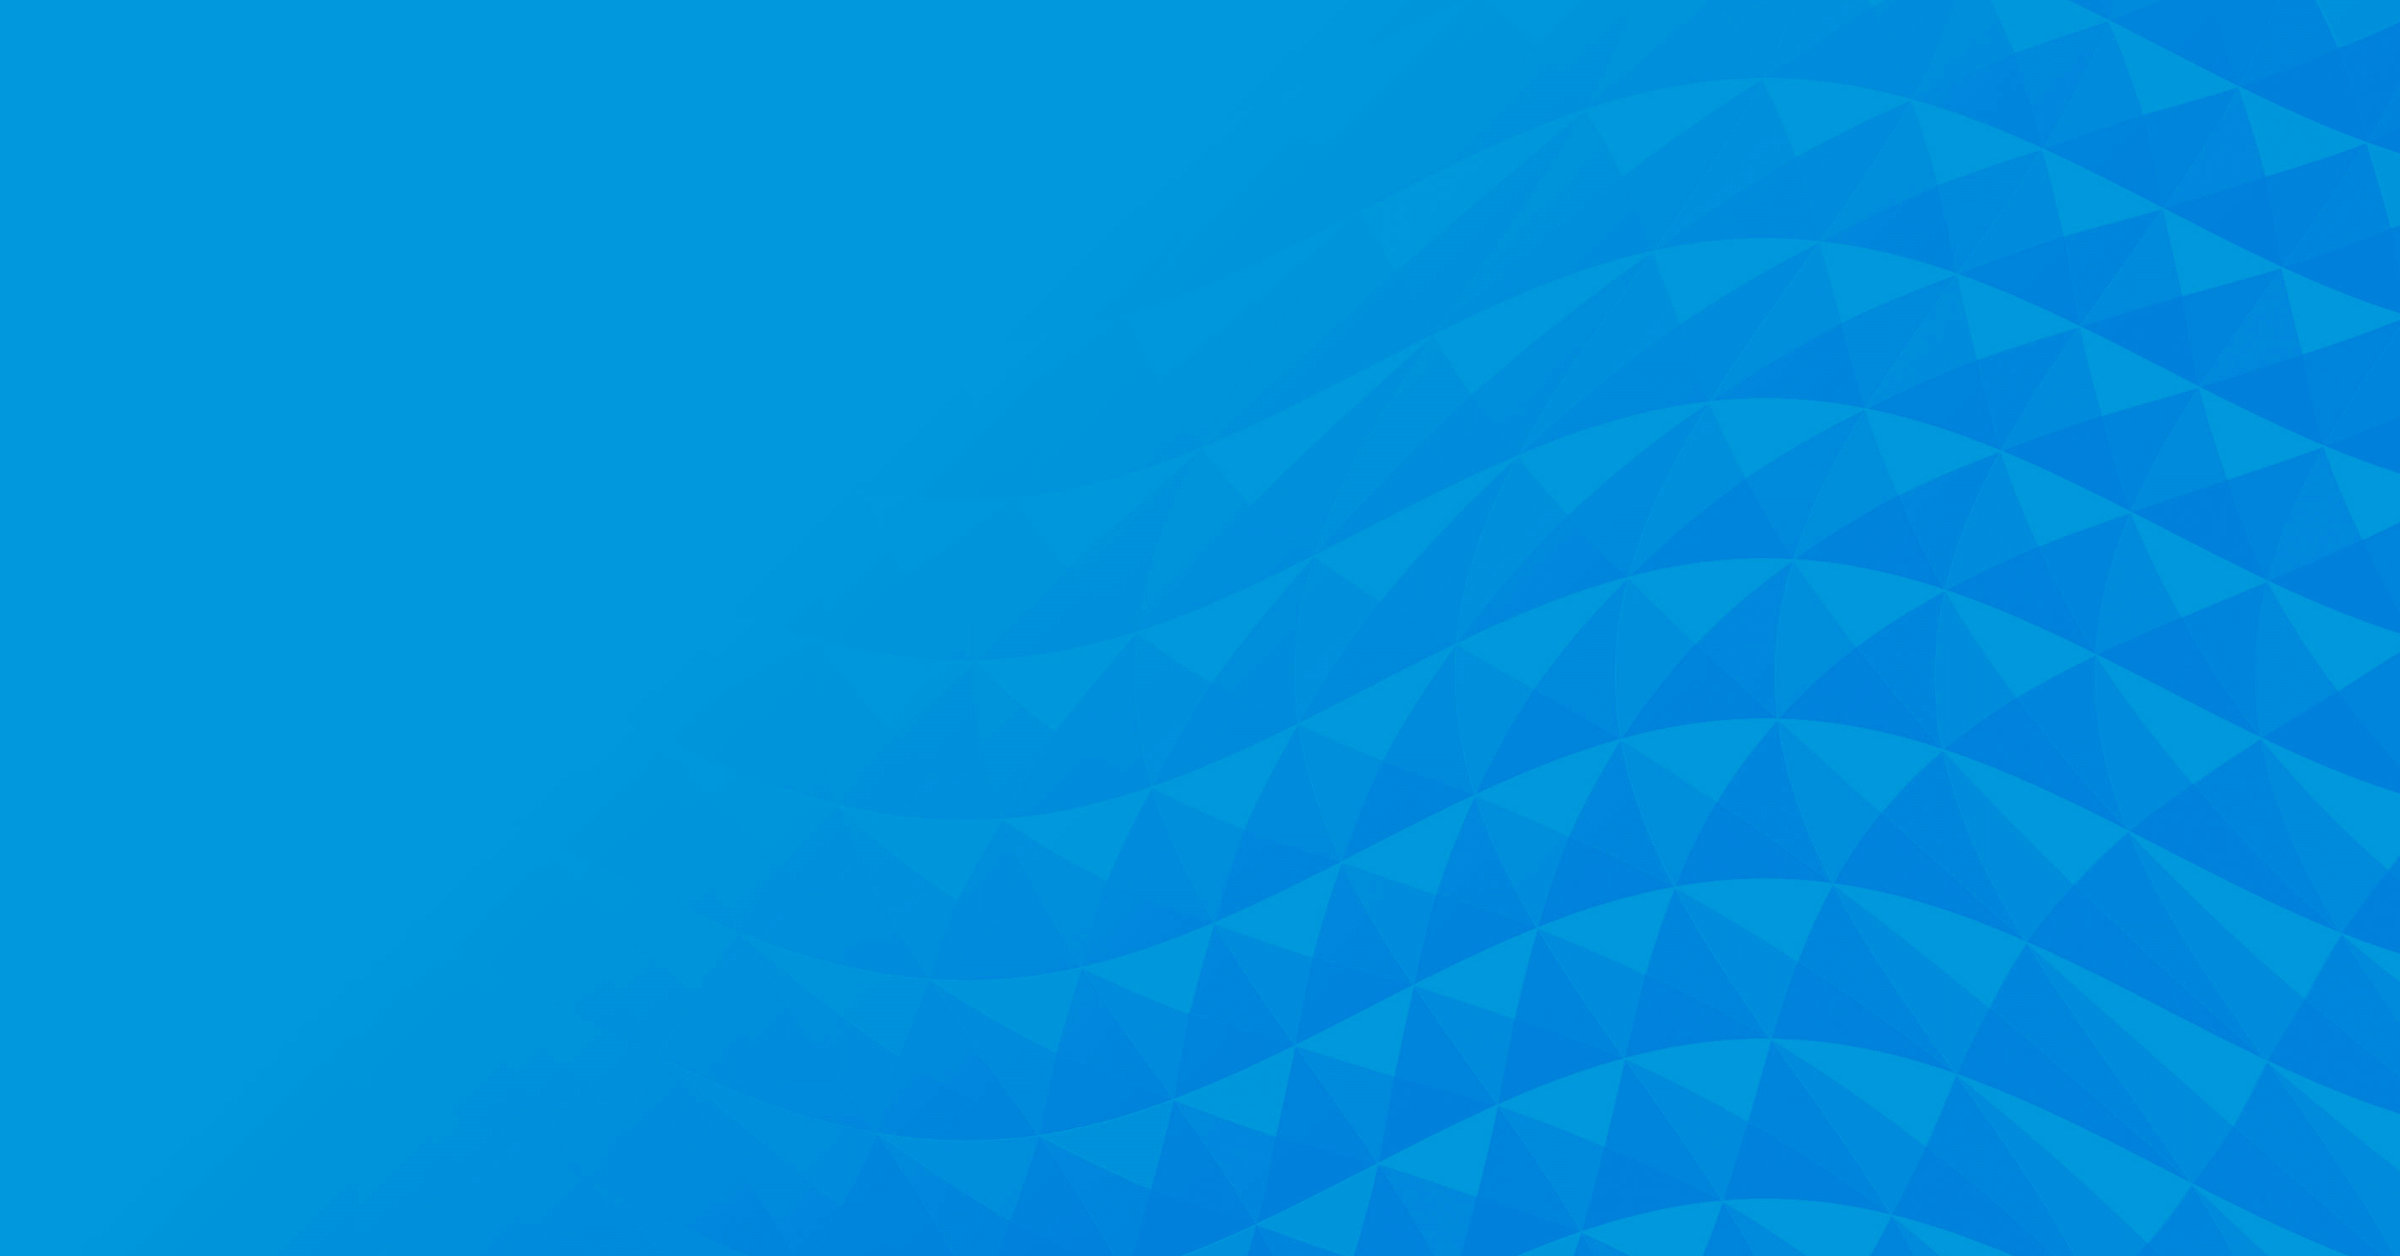 Nebulaworks Blue Texture Background